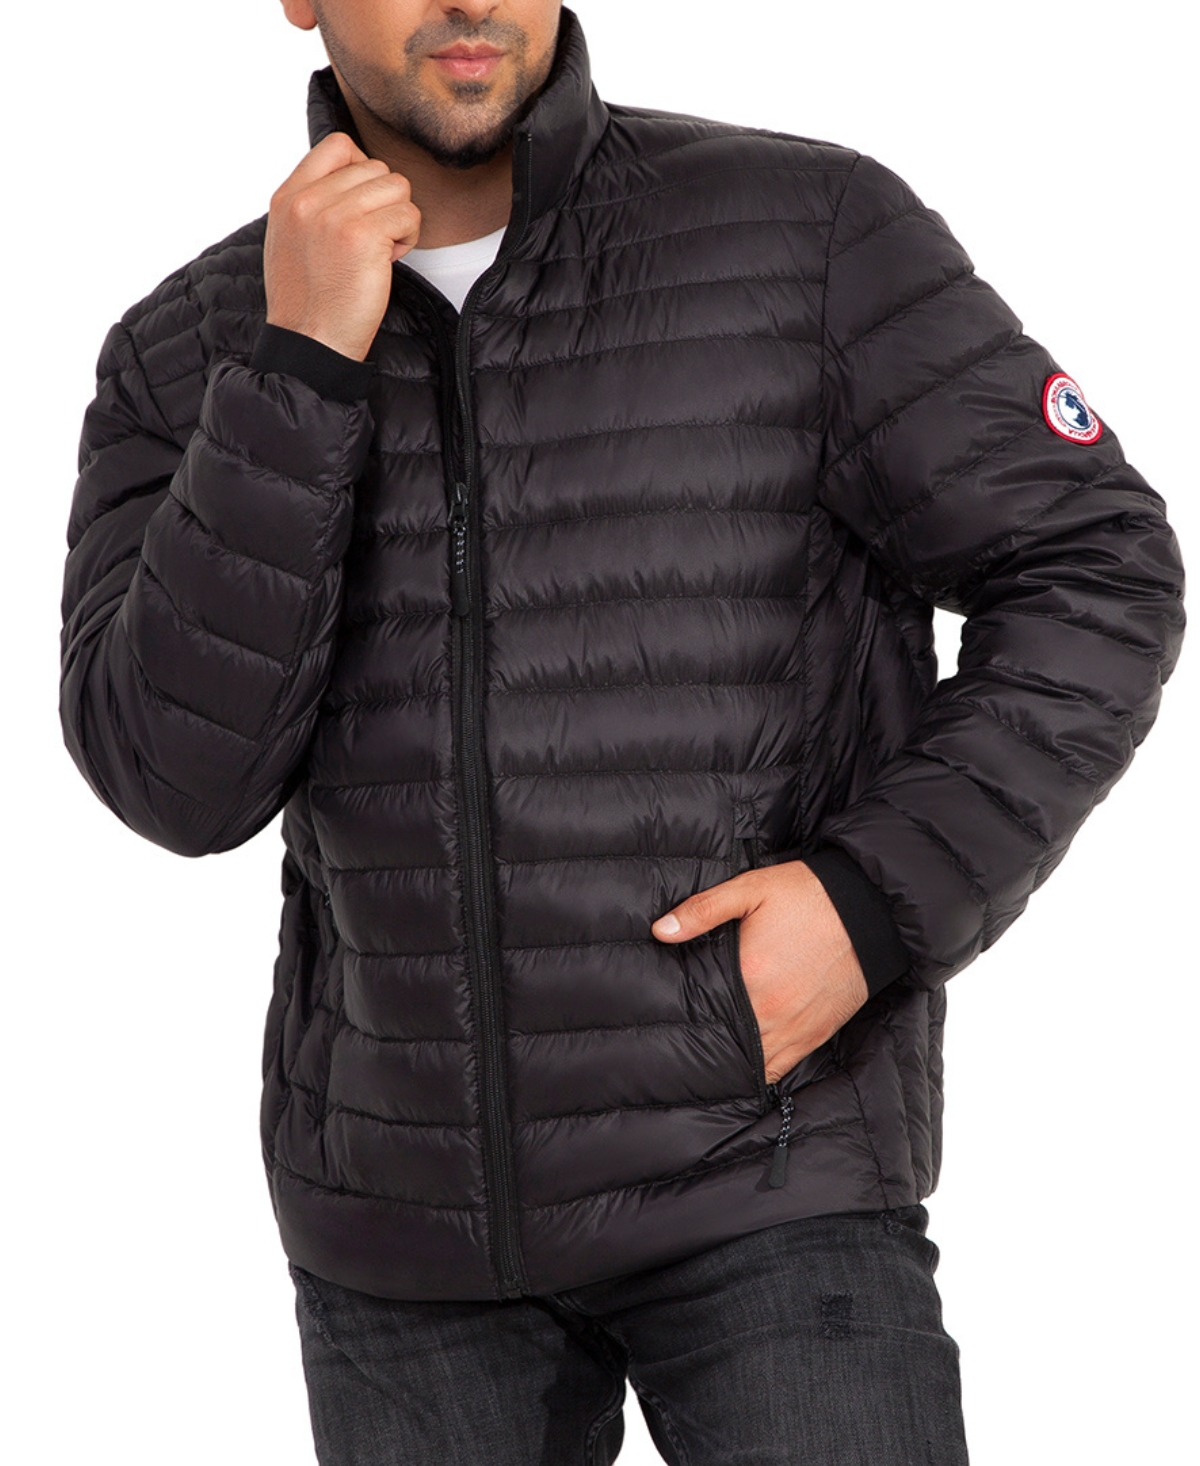 Men's Ultra-Light Packable Down Jacket - Black